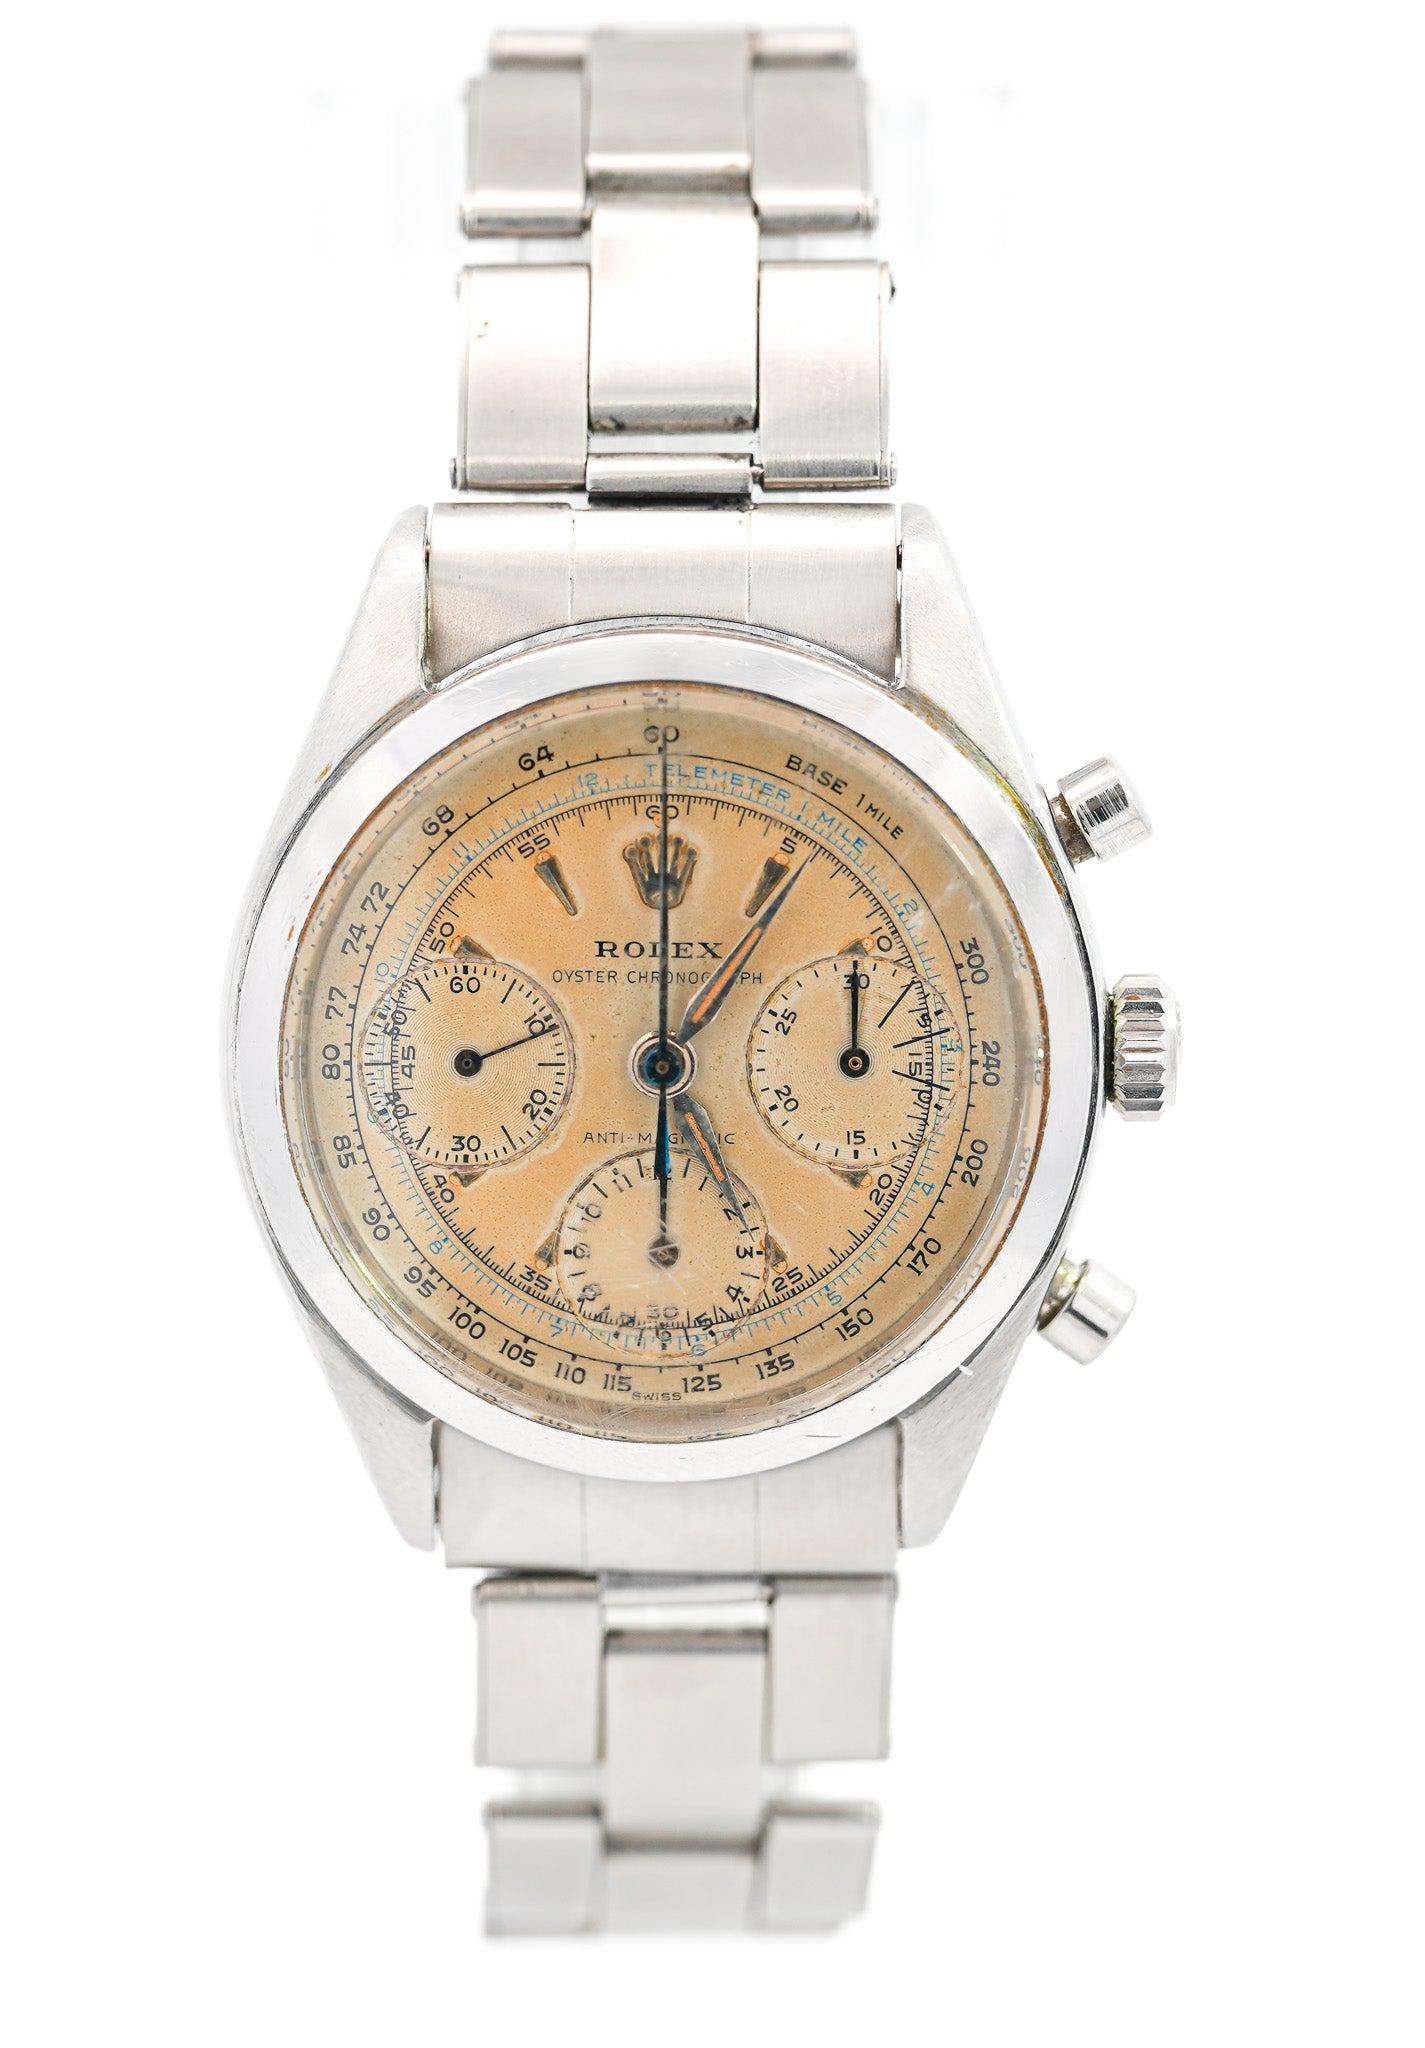 Rolex-6234-Vintage-Pre-Daytona-Oyster-Chronograph-36MM-Manual-Wind-Watch-Watches.jpg